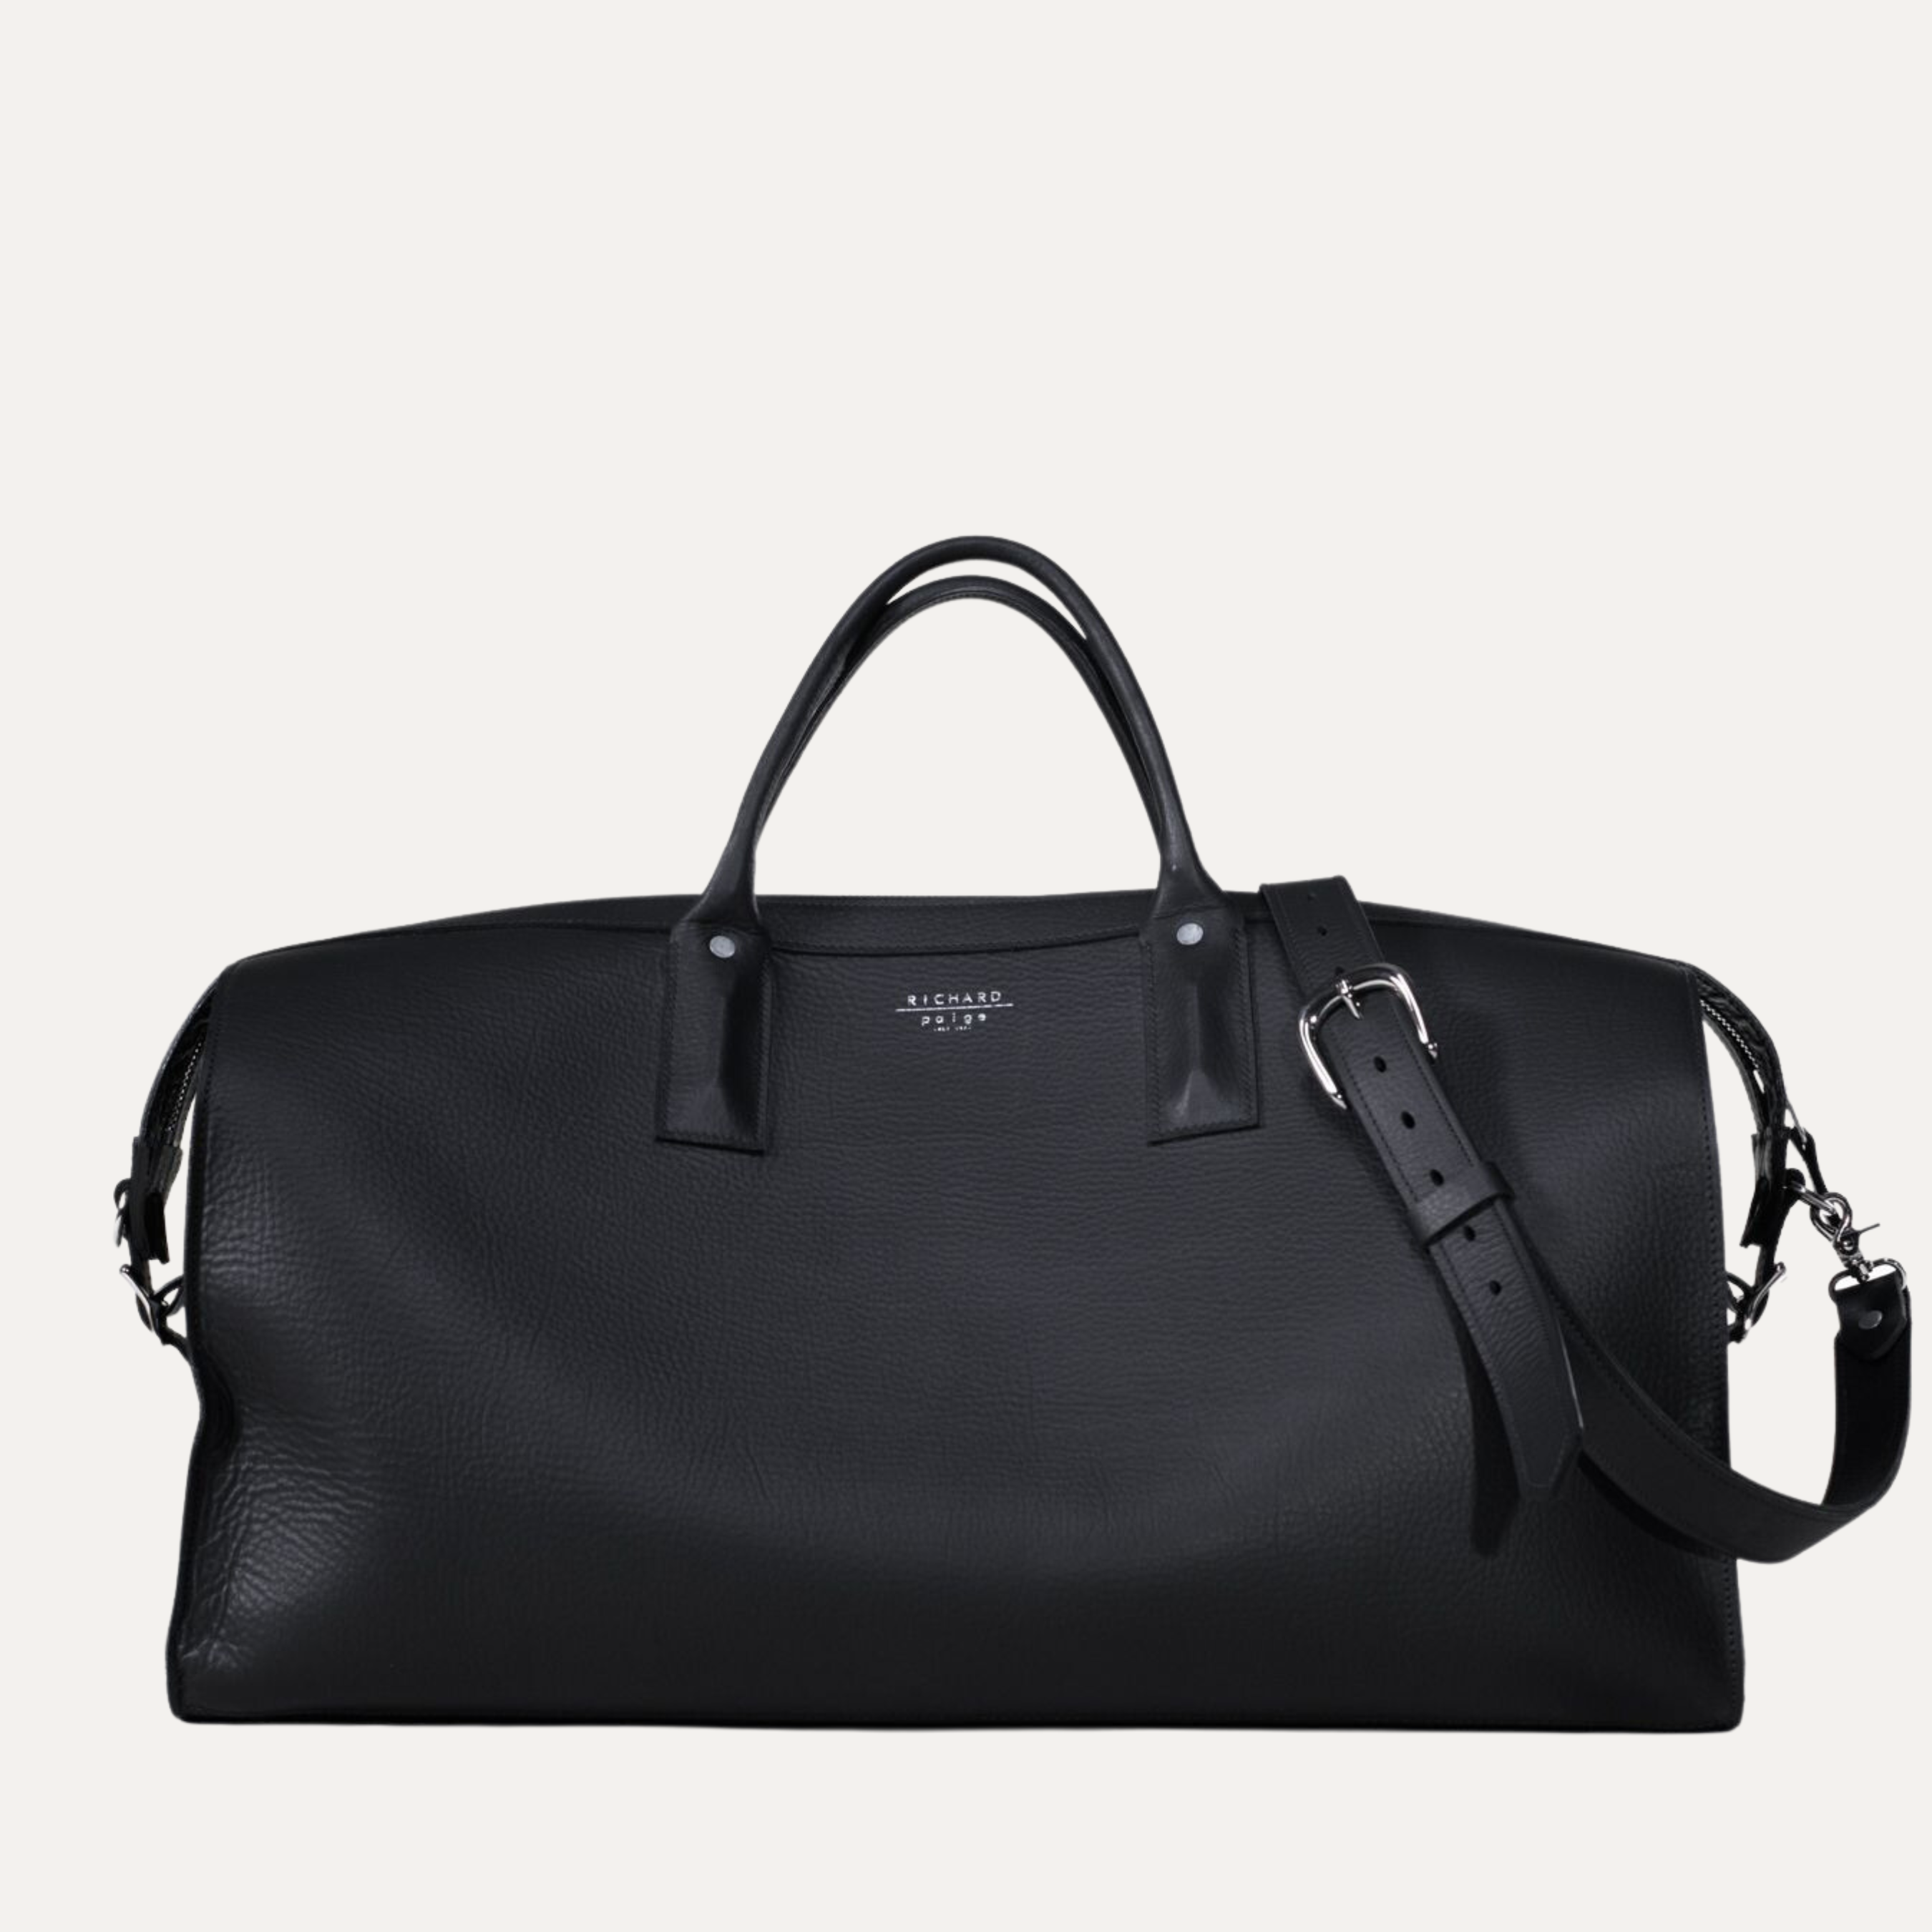 Pebbled Black Leather Weekender Travel Duffle Bag | Made in Australia